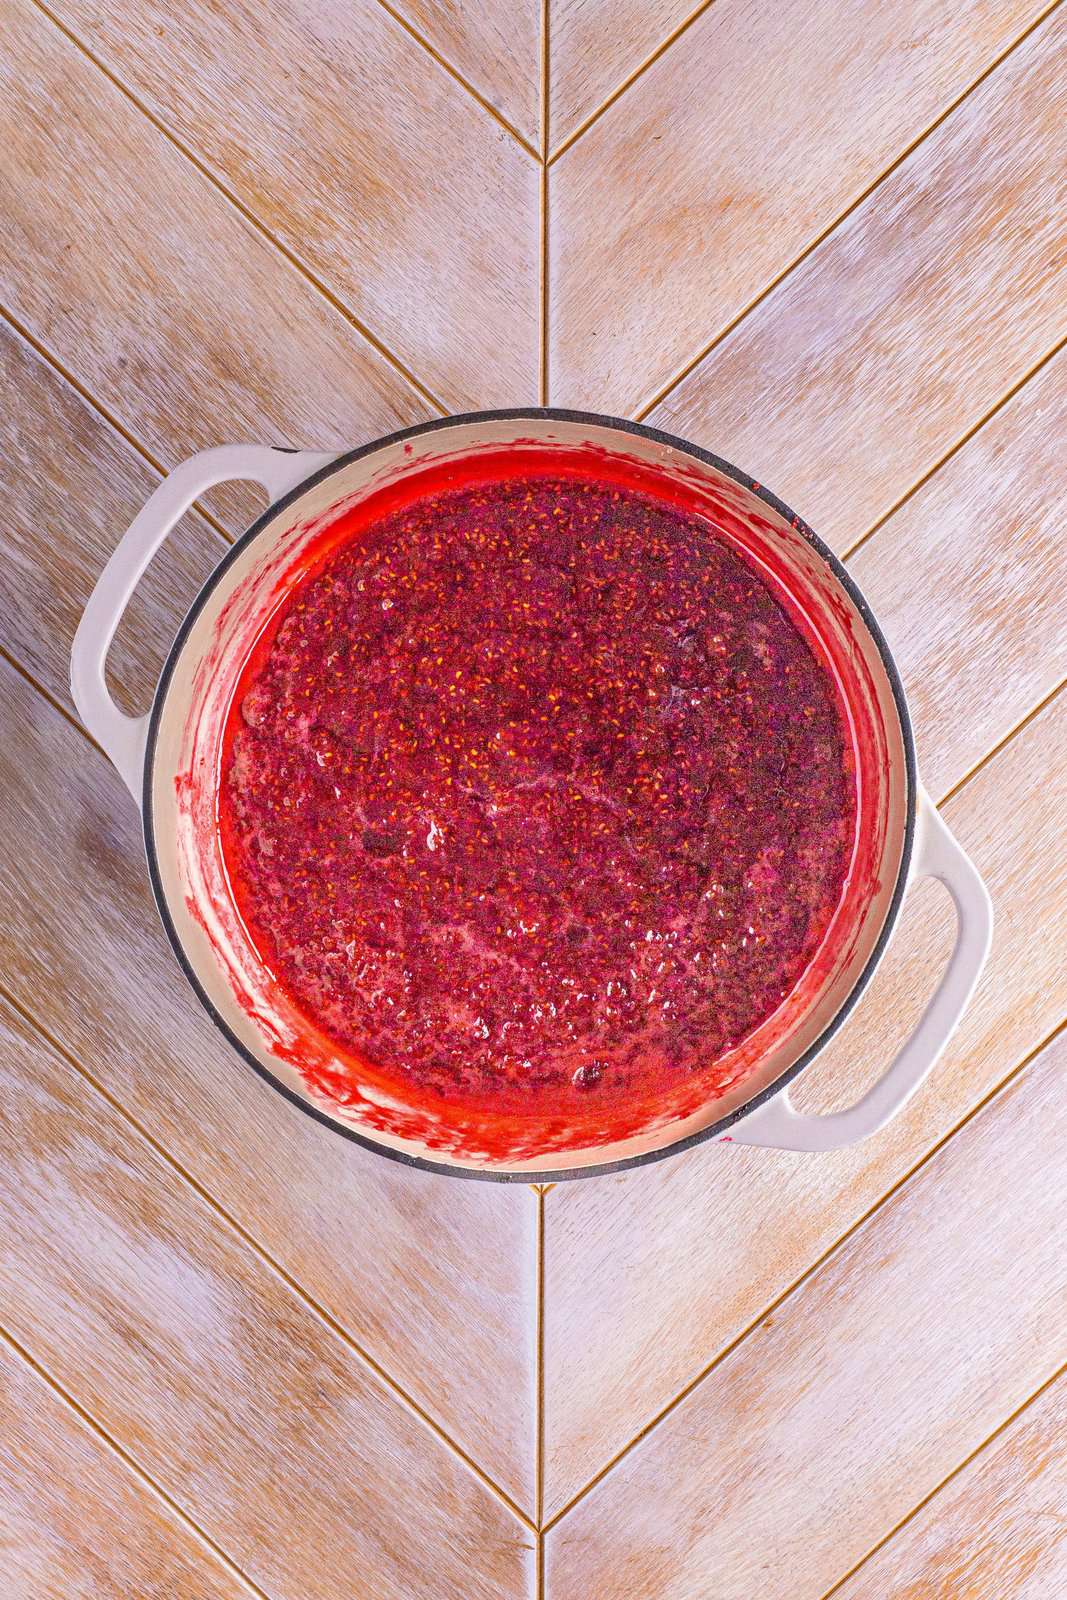 A pot of raspberry jam.